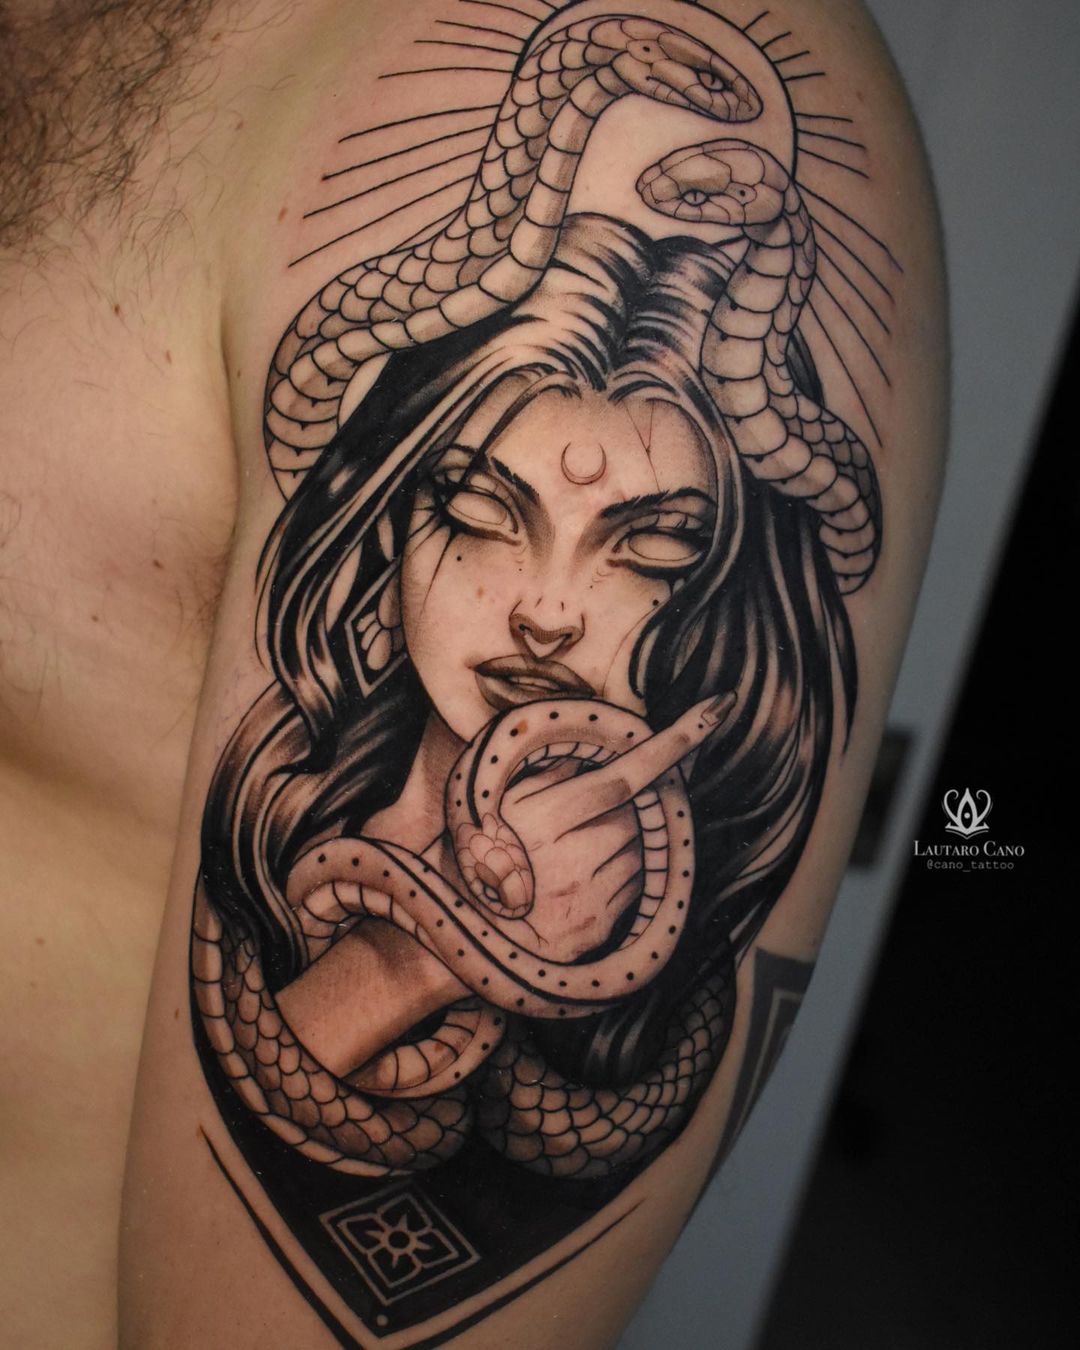 Intricately Intertwining Snake Tattoos Using Black and White Ink